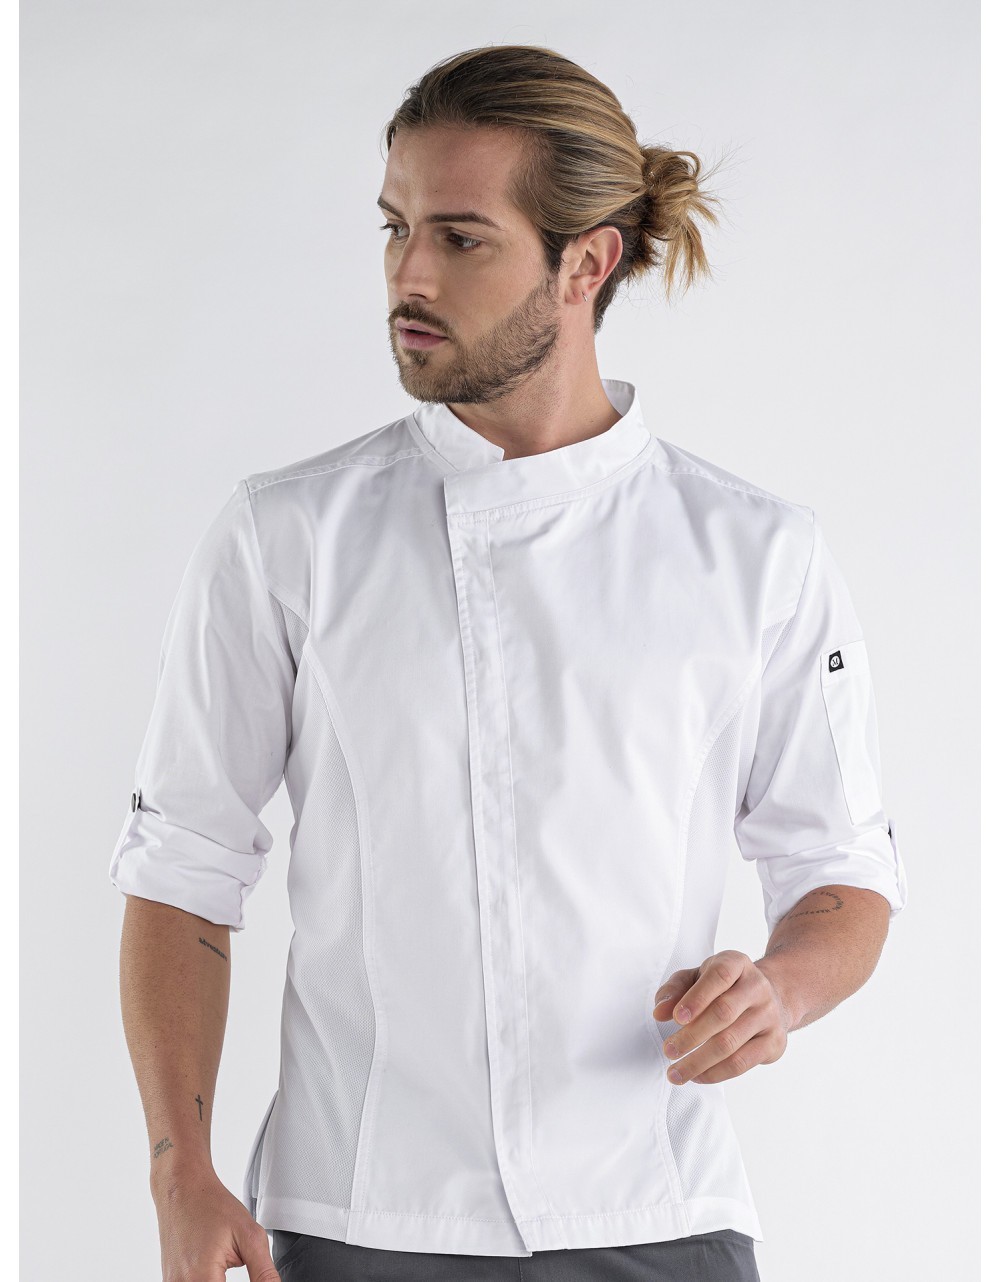 https://www.cfardas.pt/24209-large_default/comfort-chefs-jacket-martiform.jpg